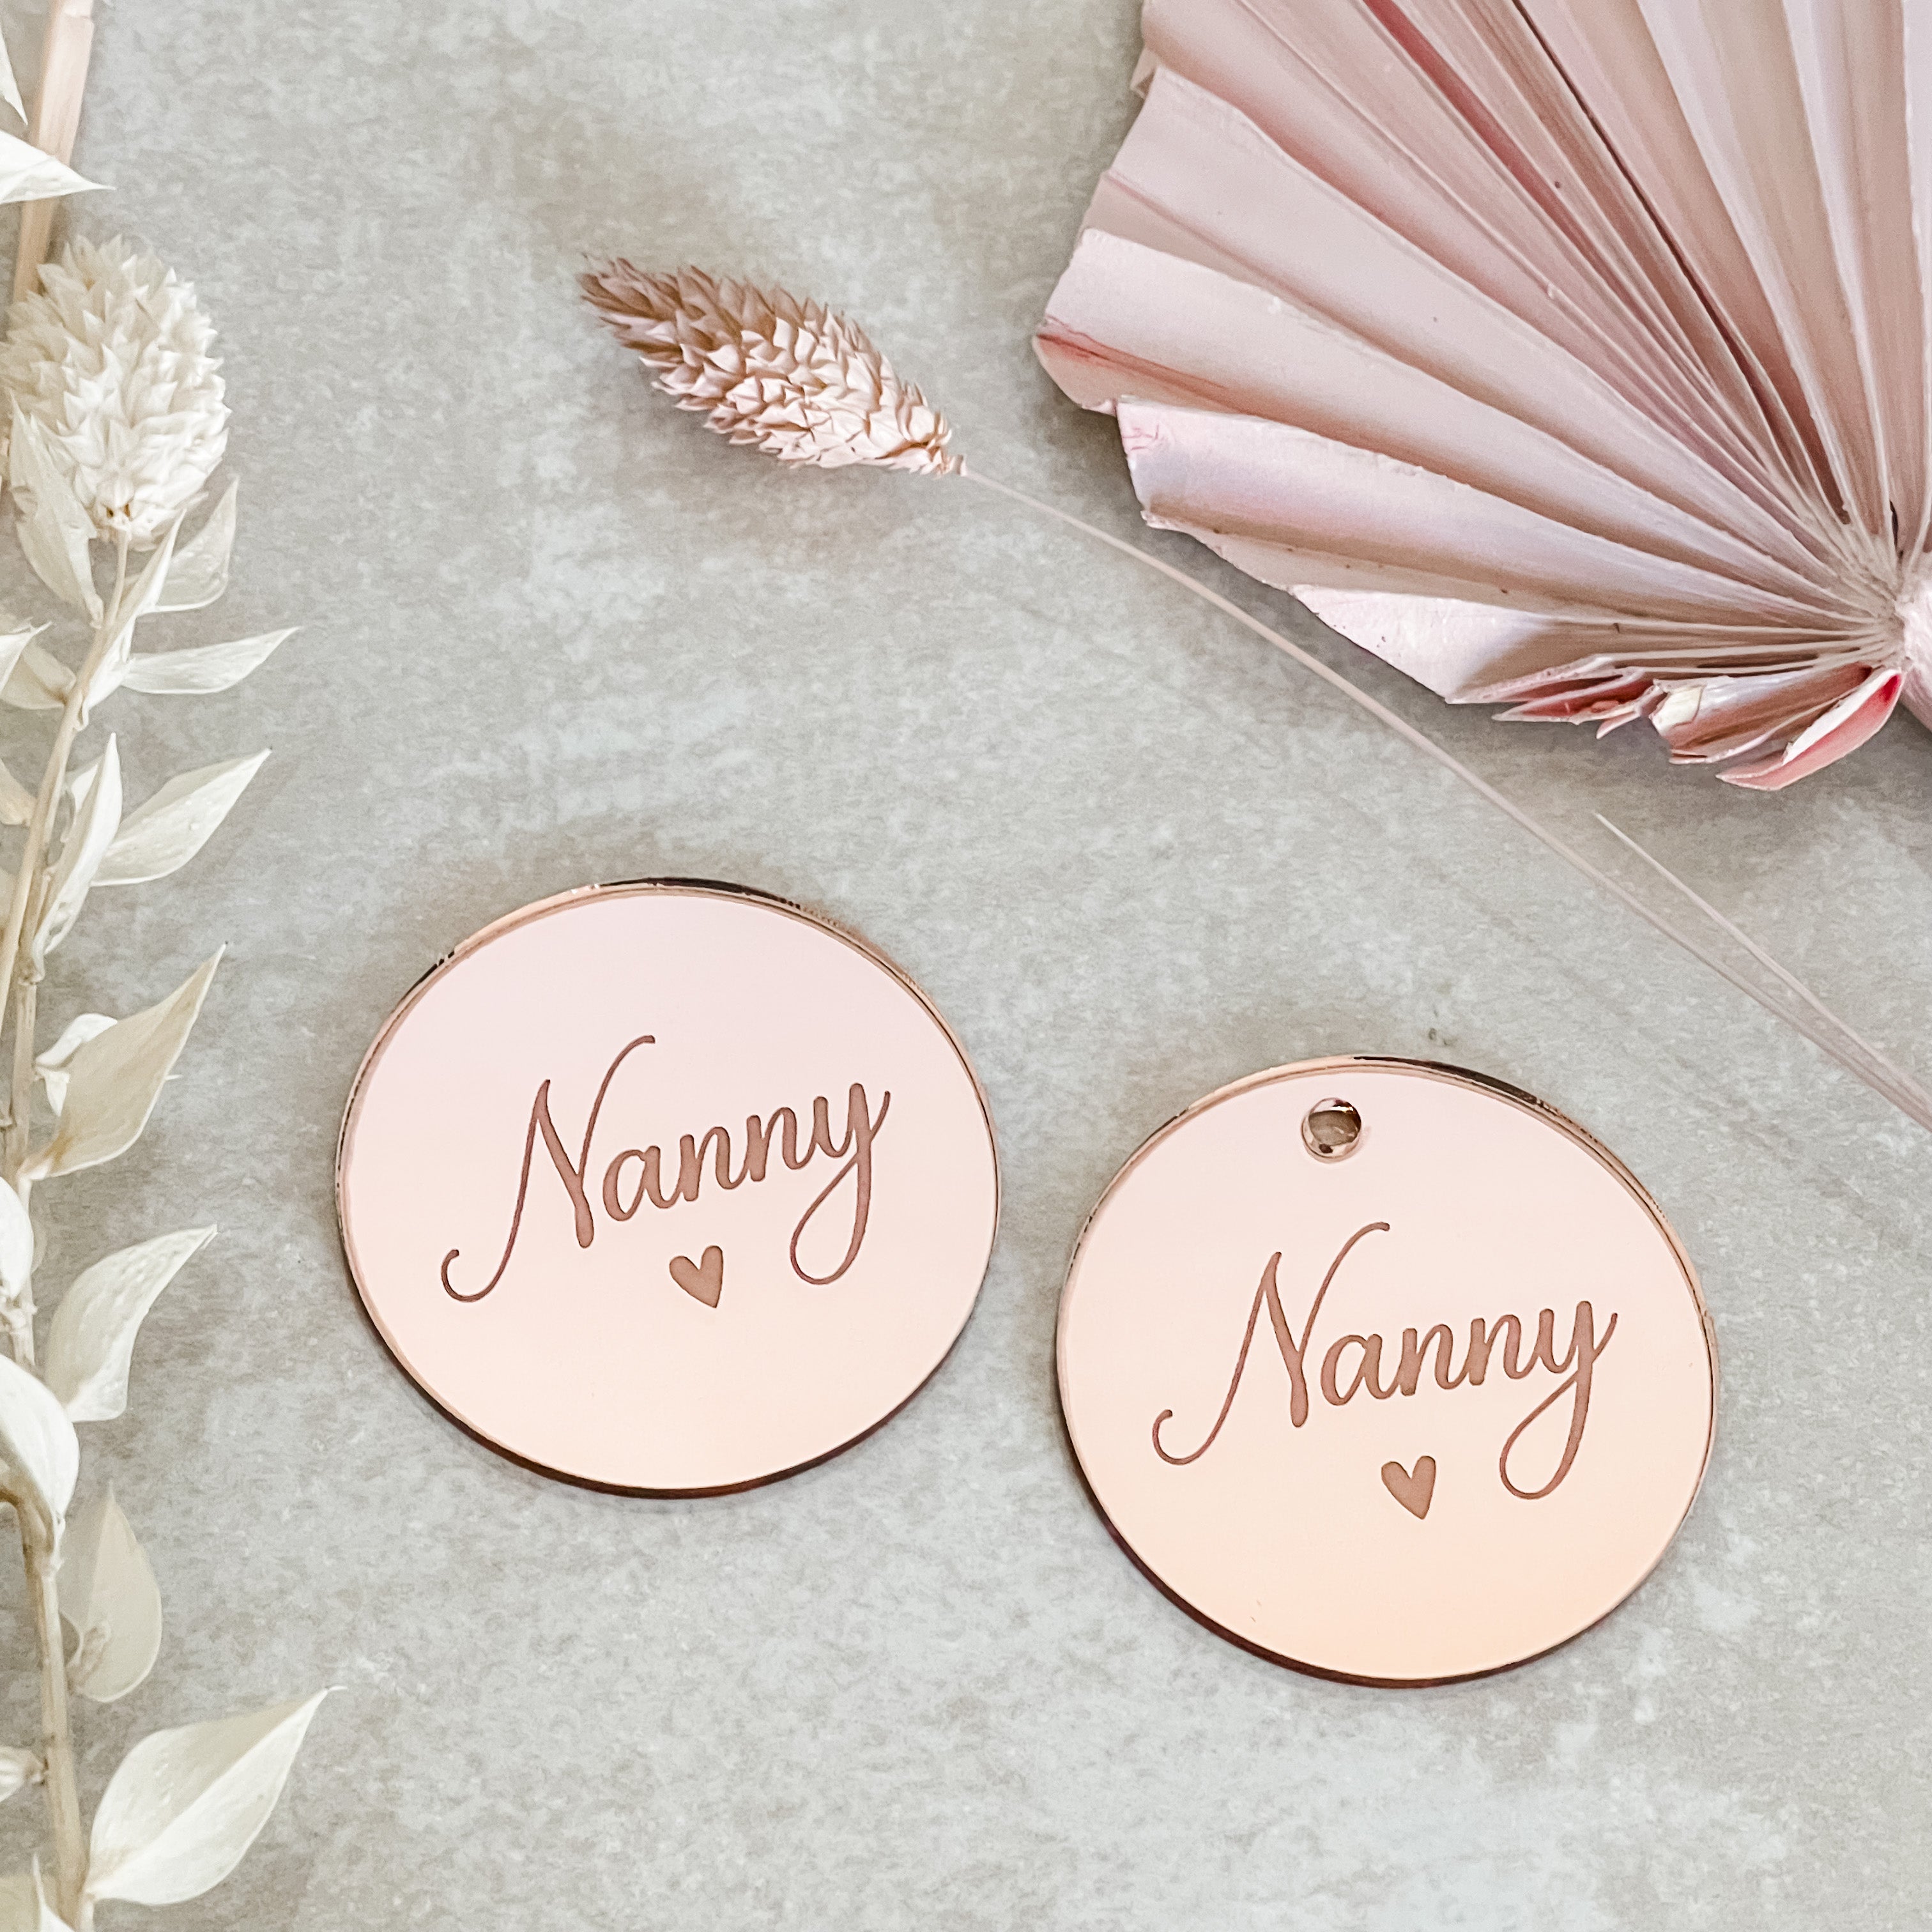 Nanny Engraved Gift Tags